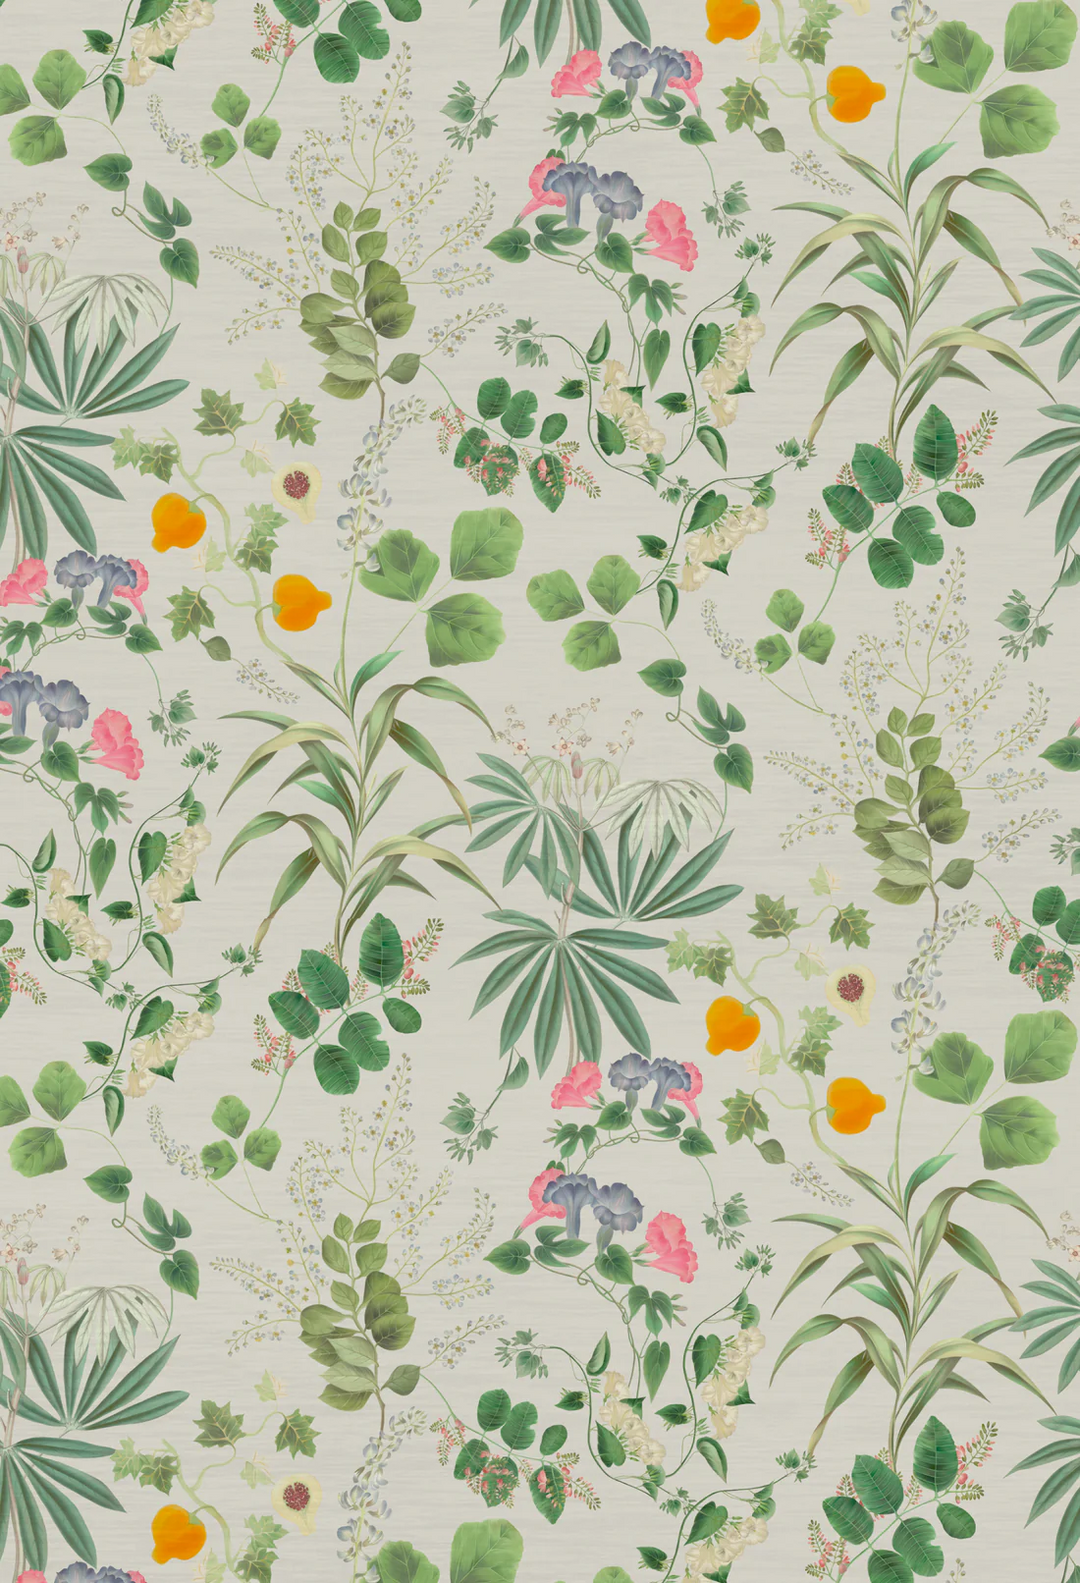 Deus-ex-gardenia-wallpaper-eden-botanical-print-hand-illustrated-exotic-palms-forbidden-fruits-print-measdow-green-pink-blue-print-white-background